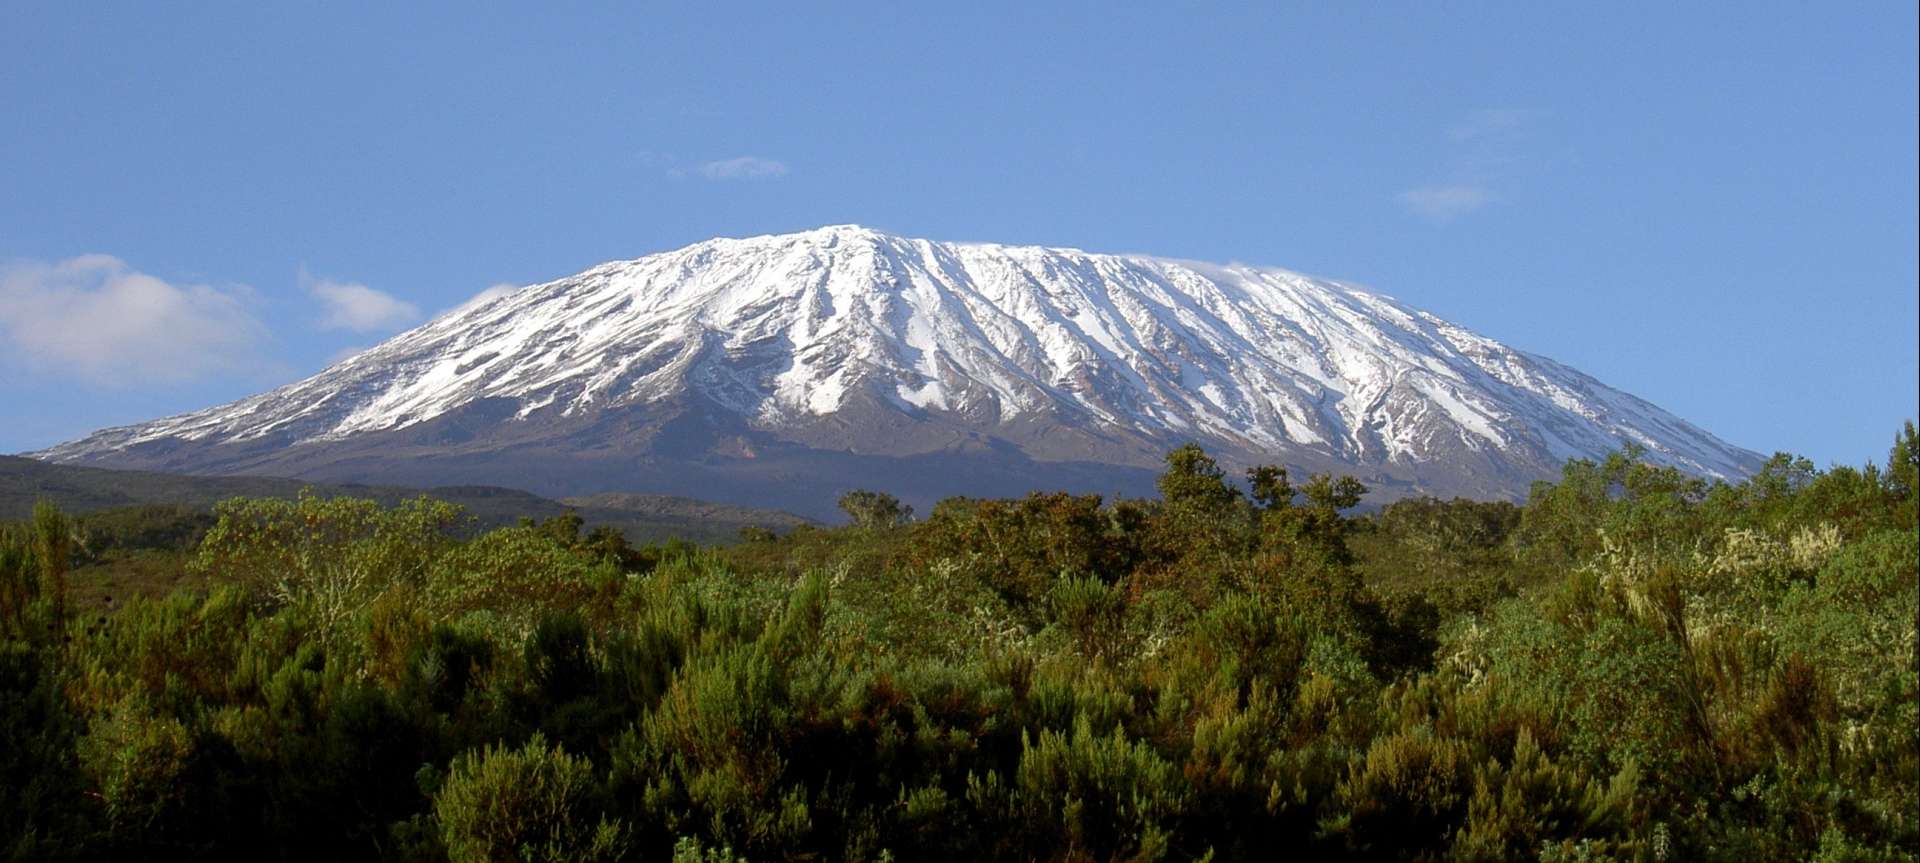 The snowy peak of Africa's highest mountain and the world's highest freestanding mountain, Mount Kilimanjaro